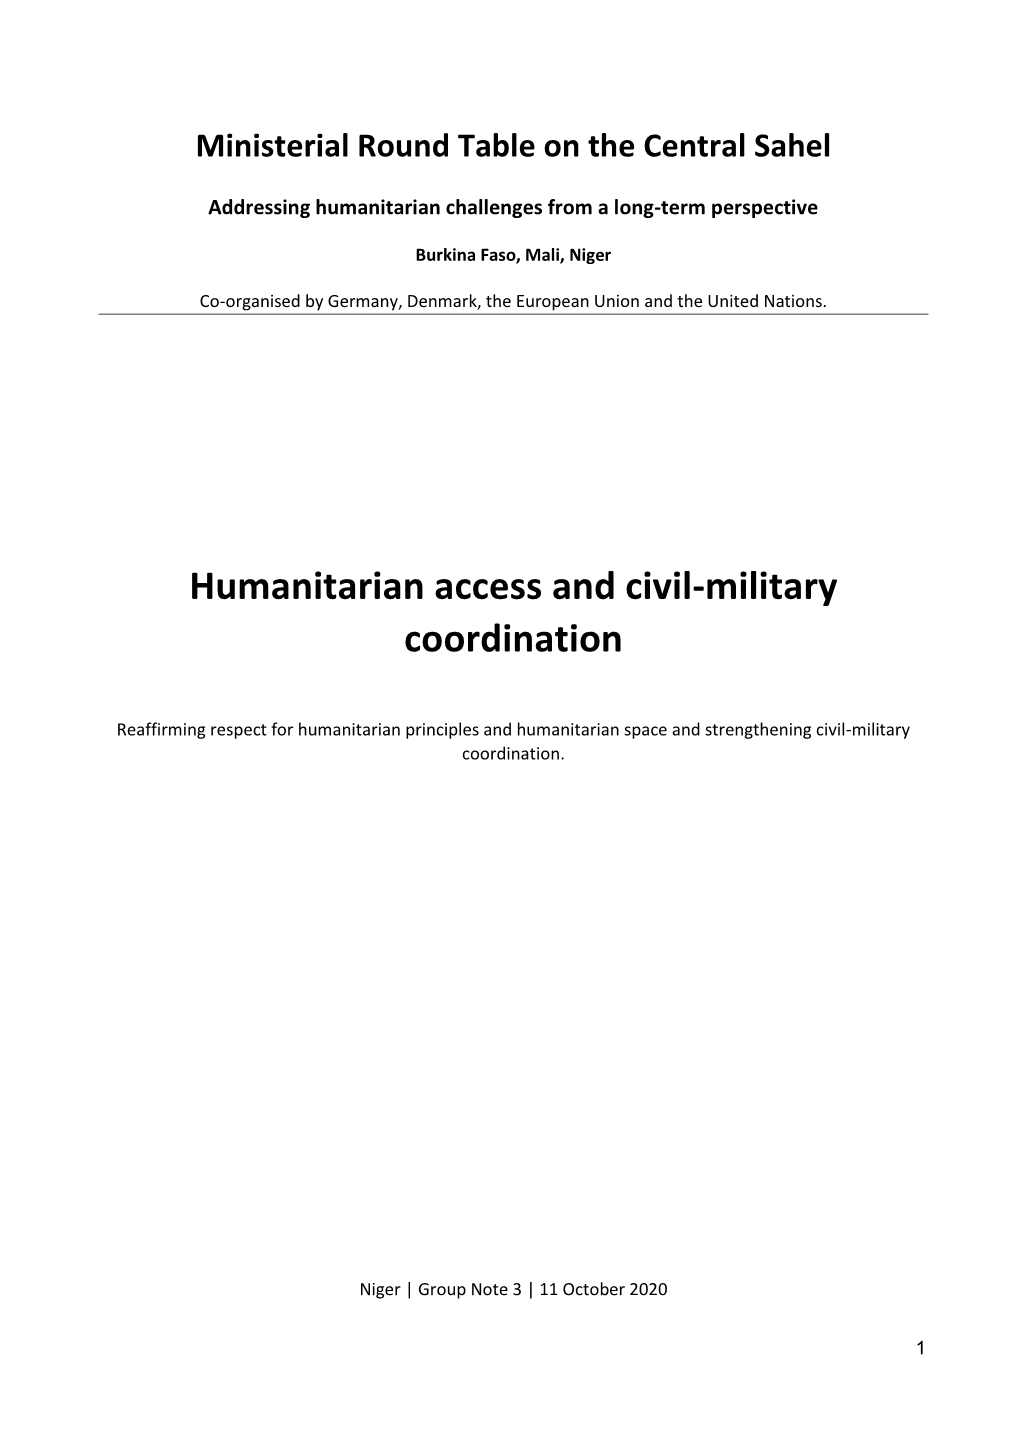 Humanitarian Access and Civil-Military Coordination